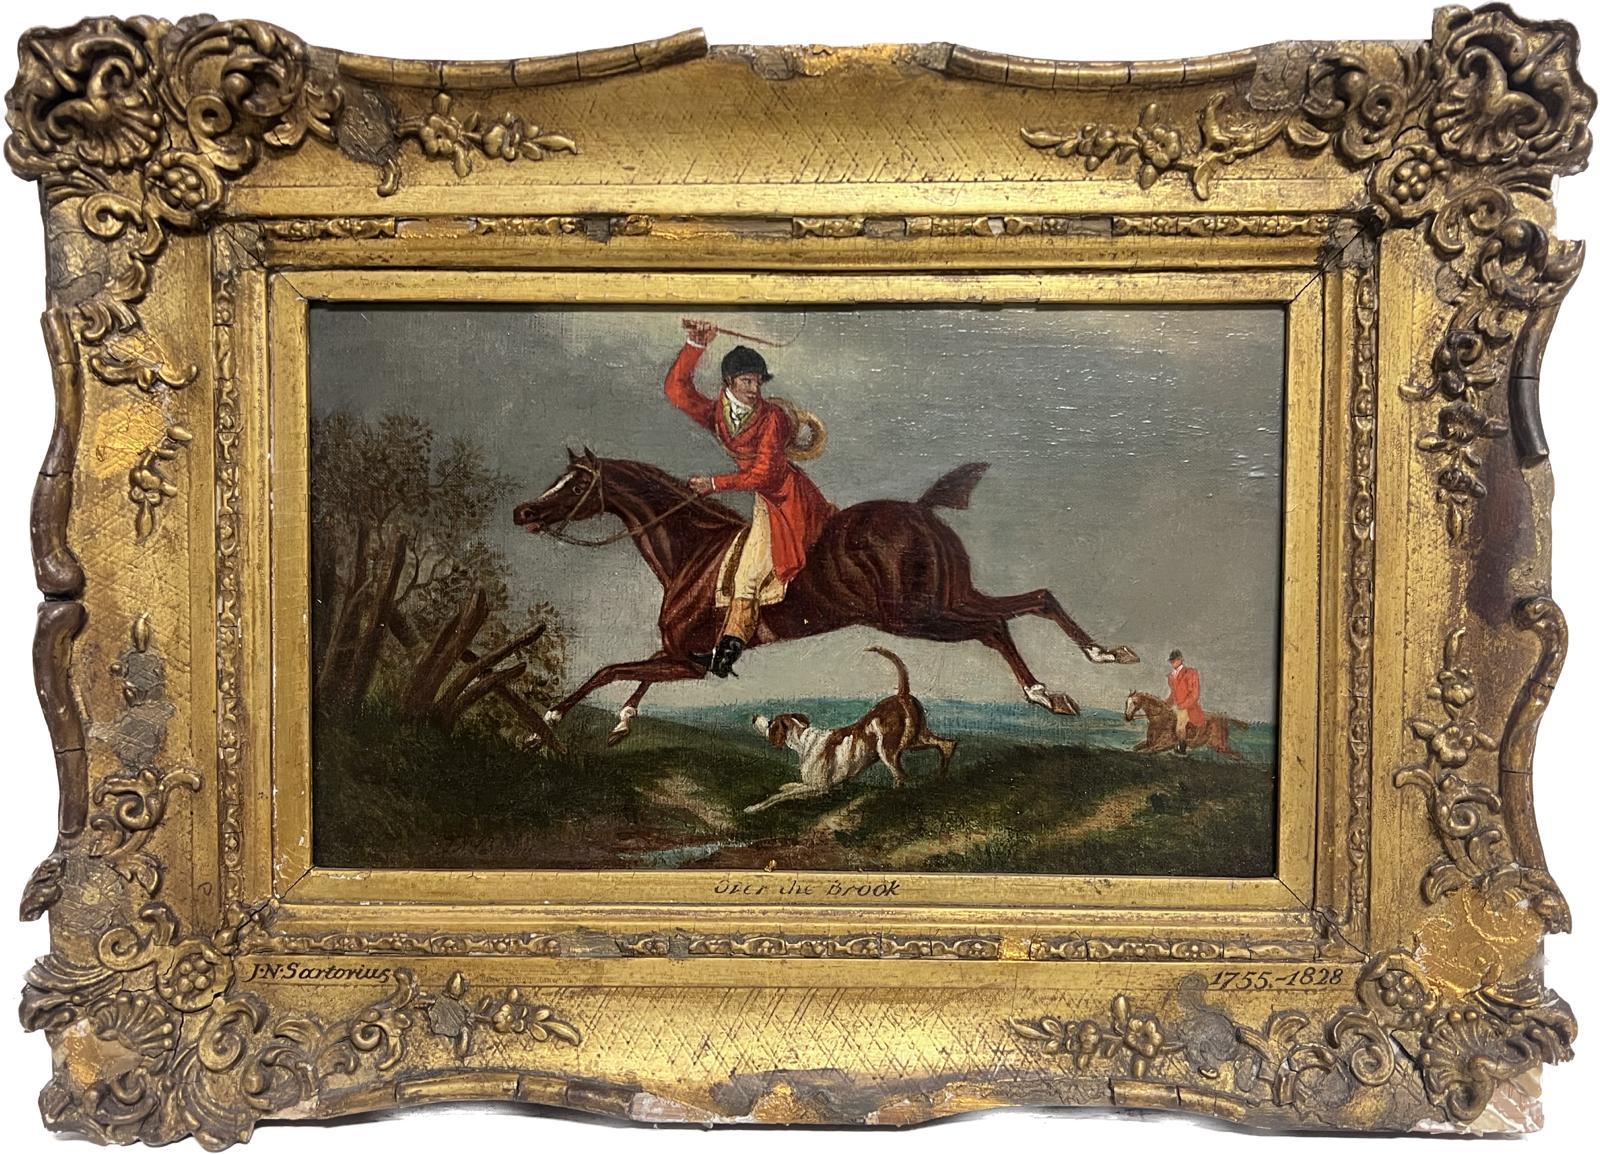 Englisches Fuchs- Jagd-Ölgemälde des 18. Jahrhunderts, Holztafel, vergoldeter Rahmen